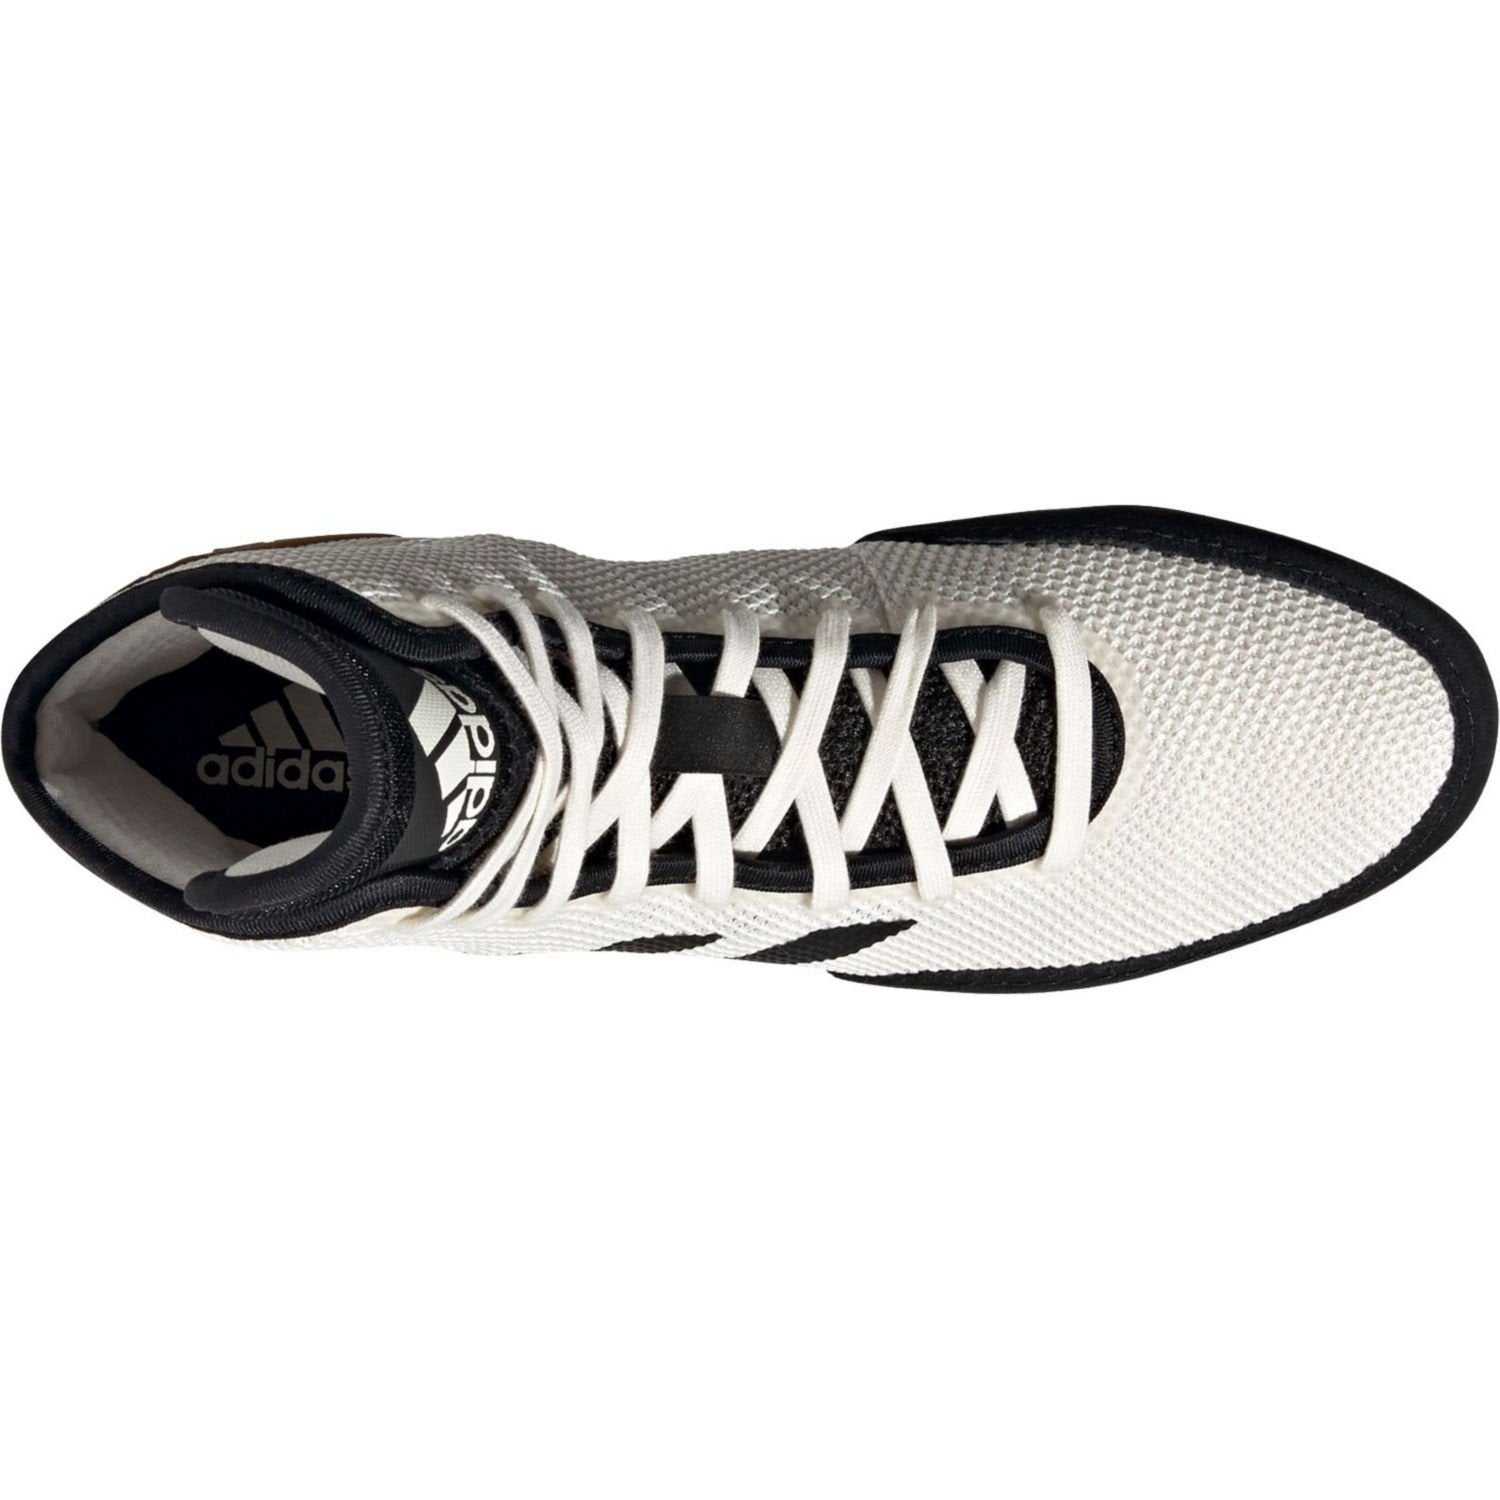 Adidas 230 Tech Fall 2.0 Wrestling Shoes - White Black